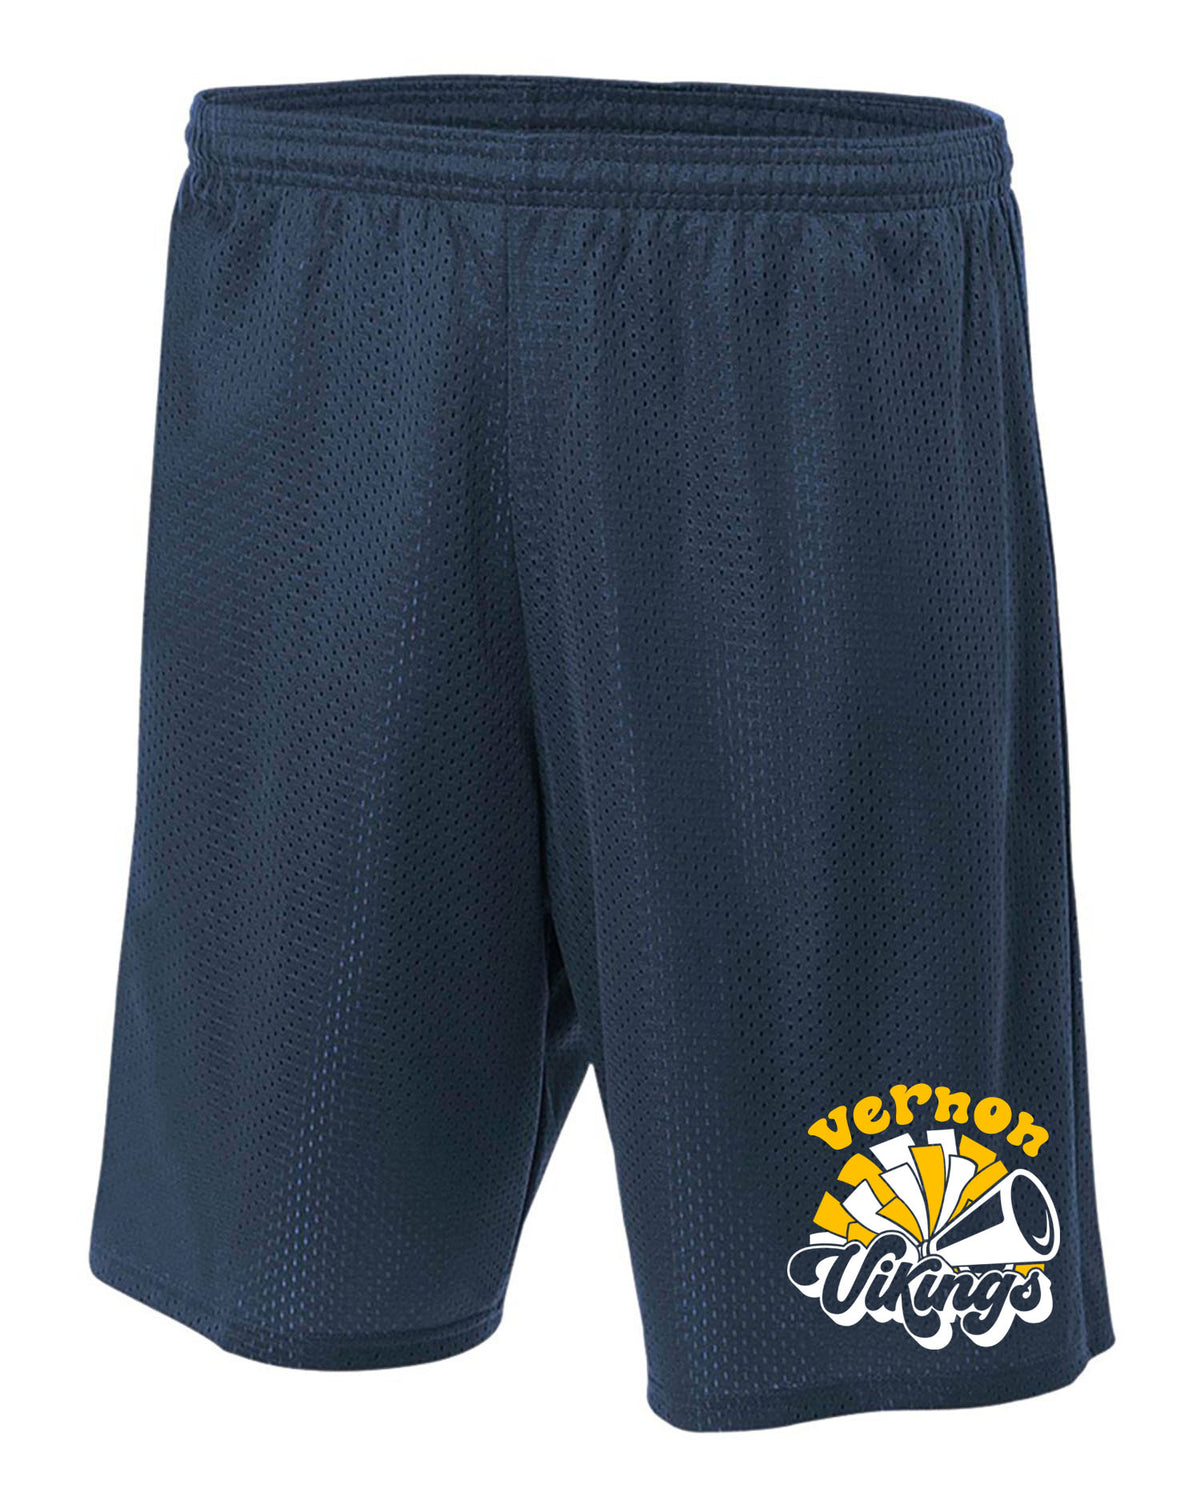 Vernon Vikings Cheer Design 12 Mesh Shorts